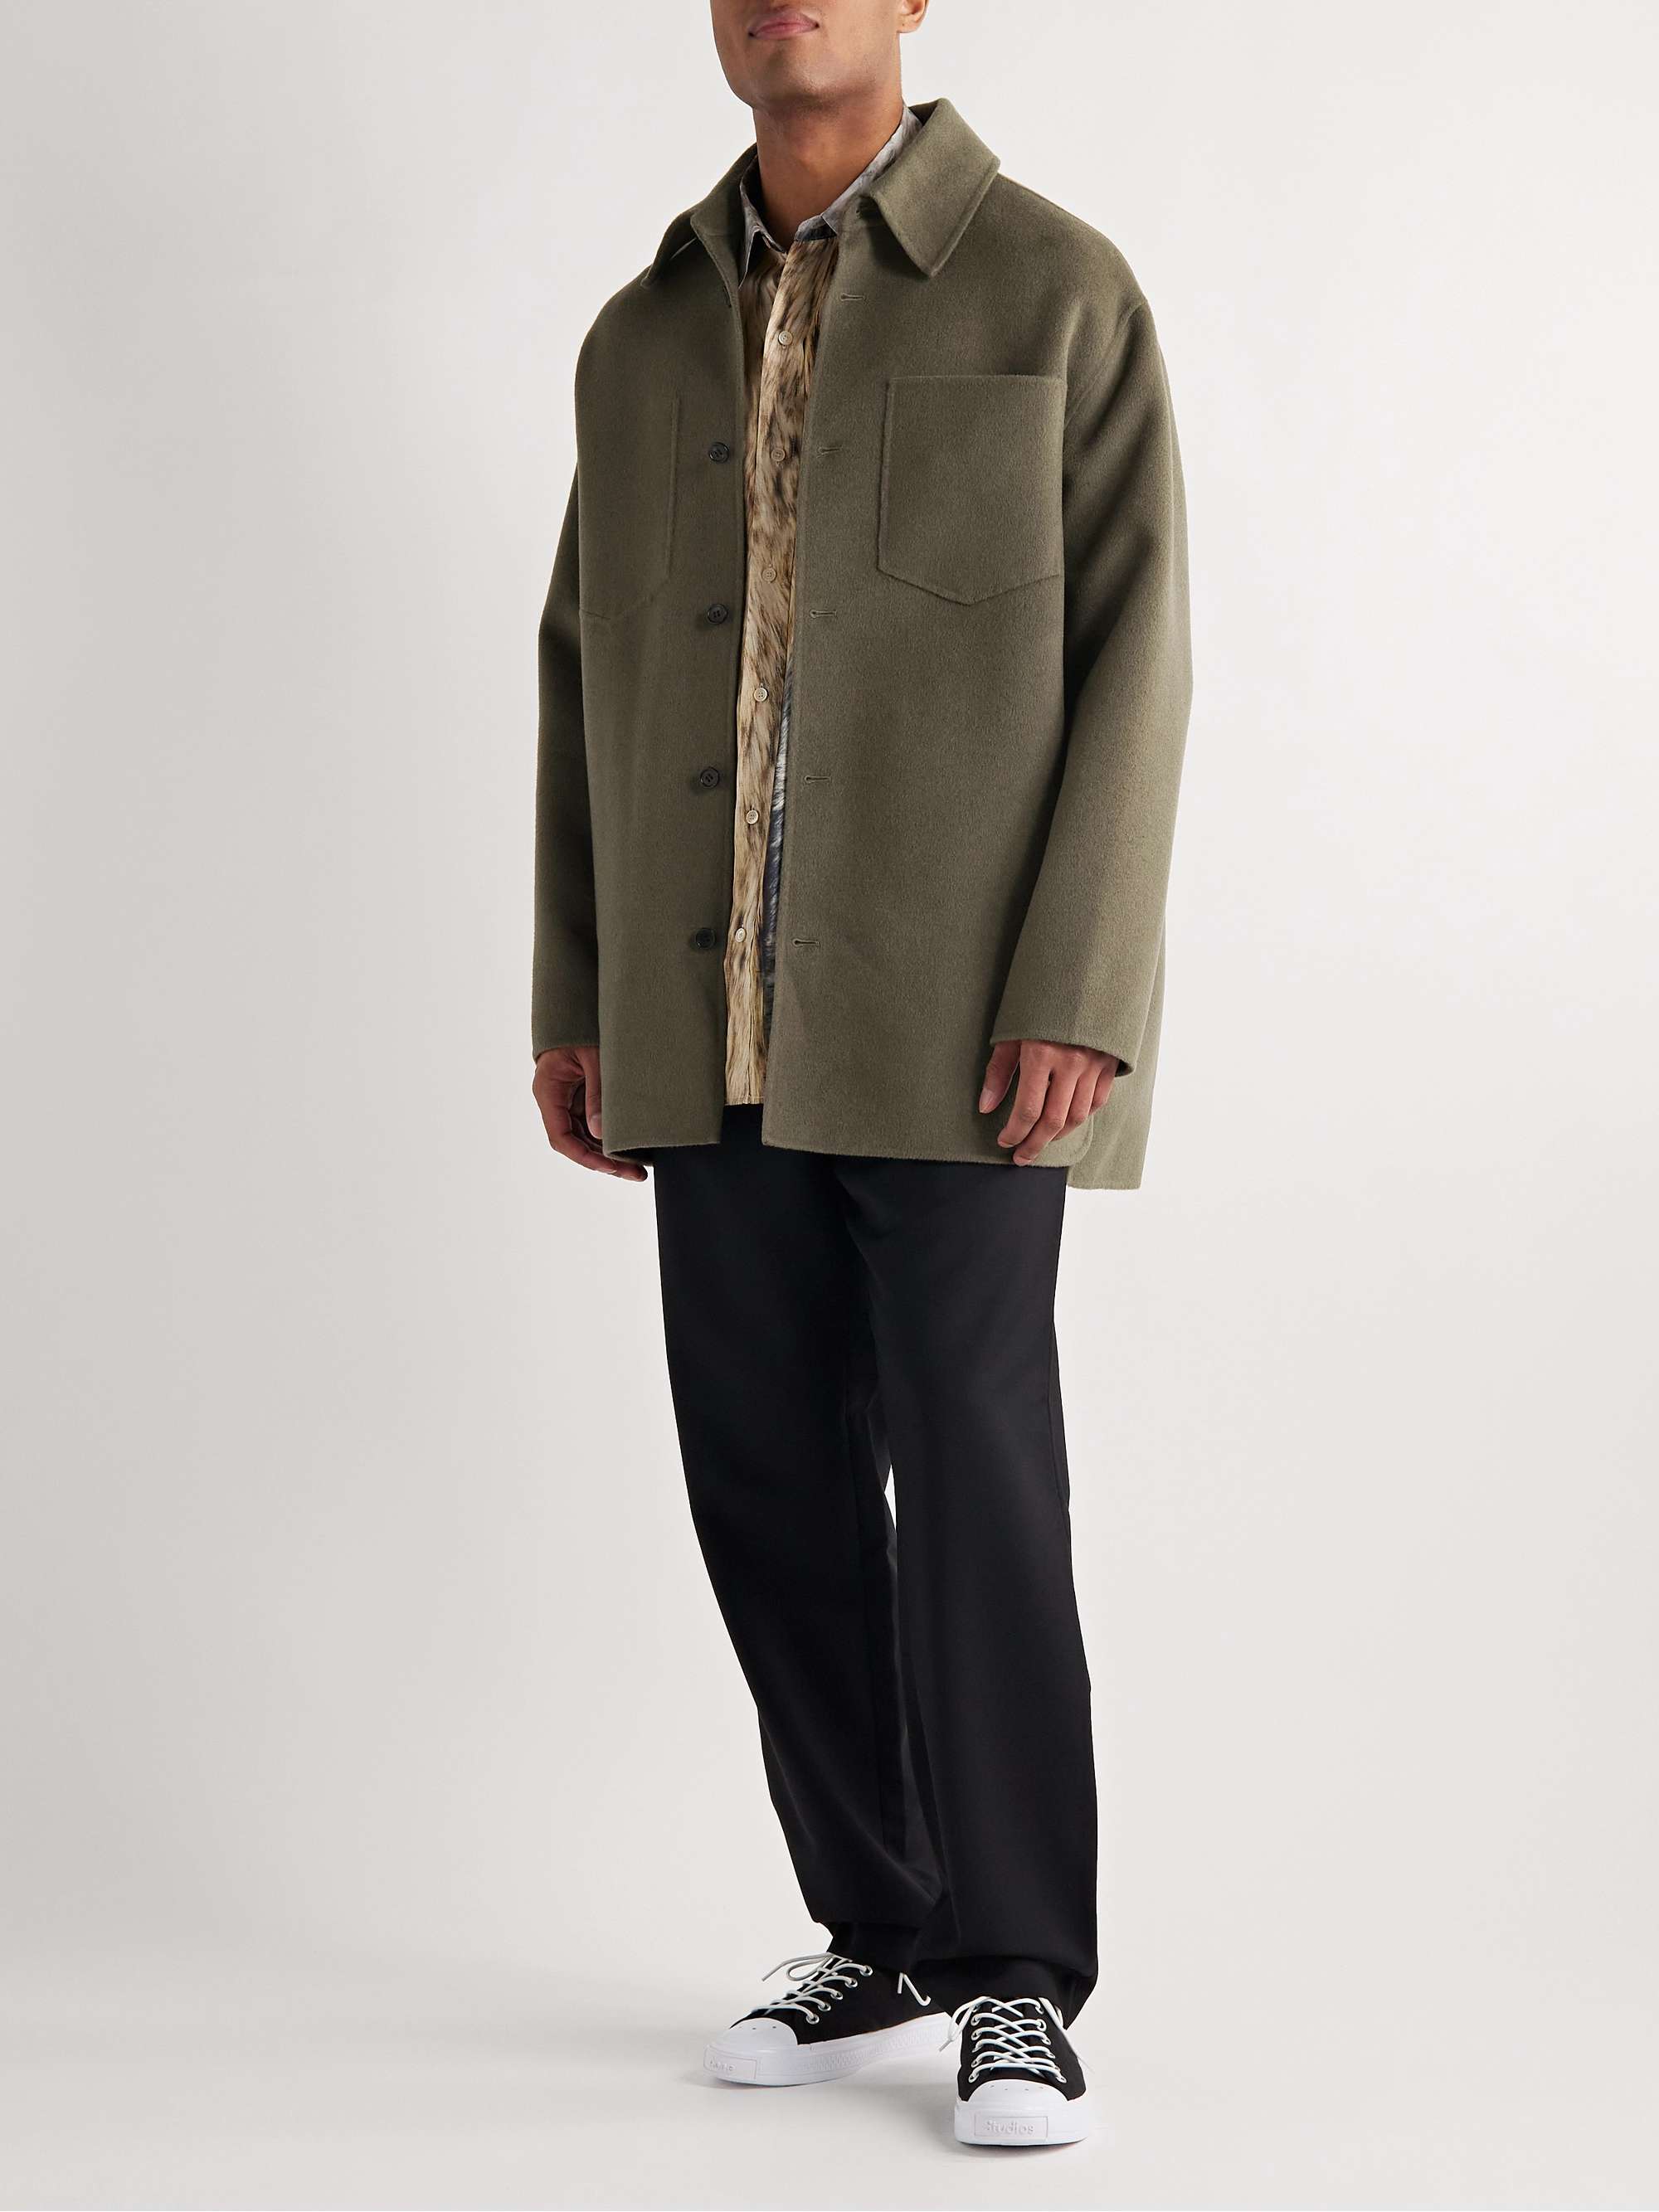 ACNE STUDIOS Domen Double-Faced Wool Jacket | MR PORTER